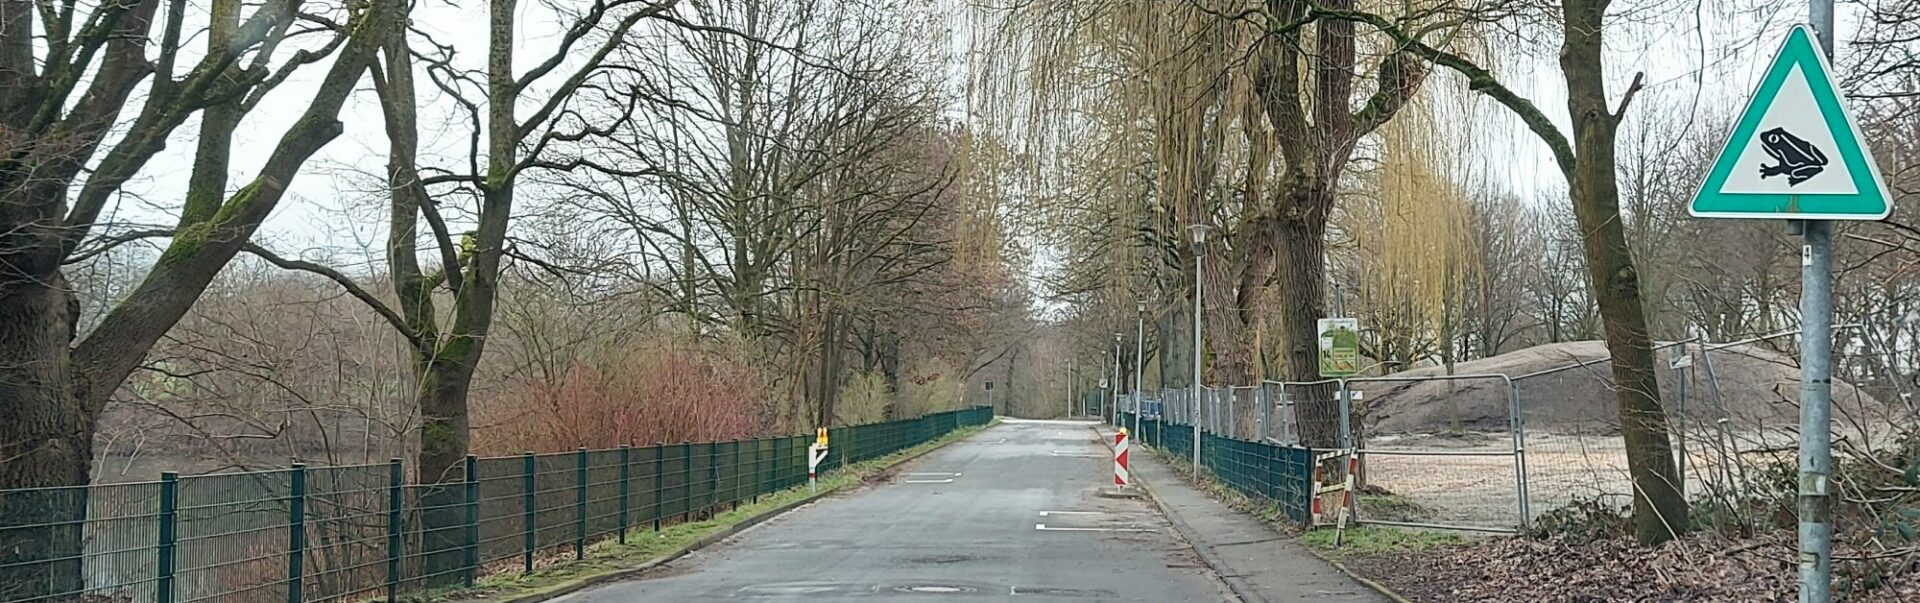 Krötenwanderung: Lichtendorfer Straße temporär gesperrt